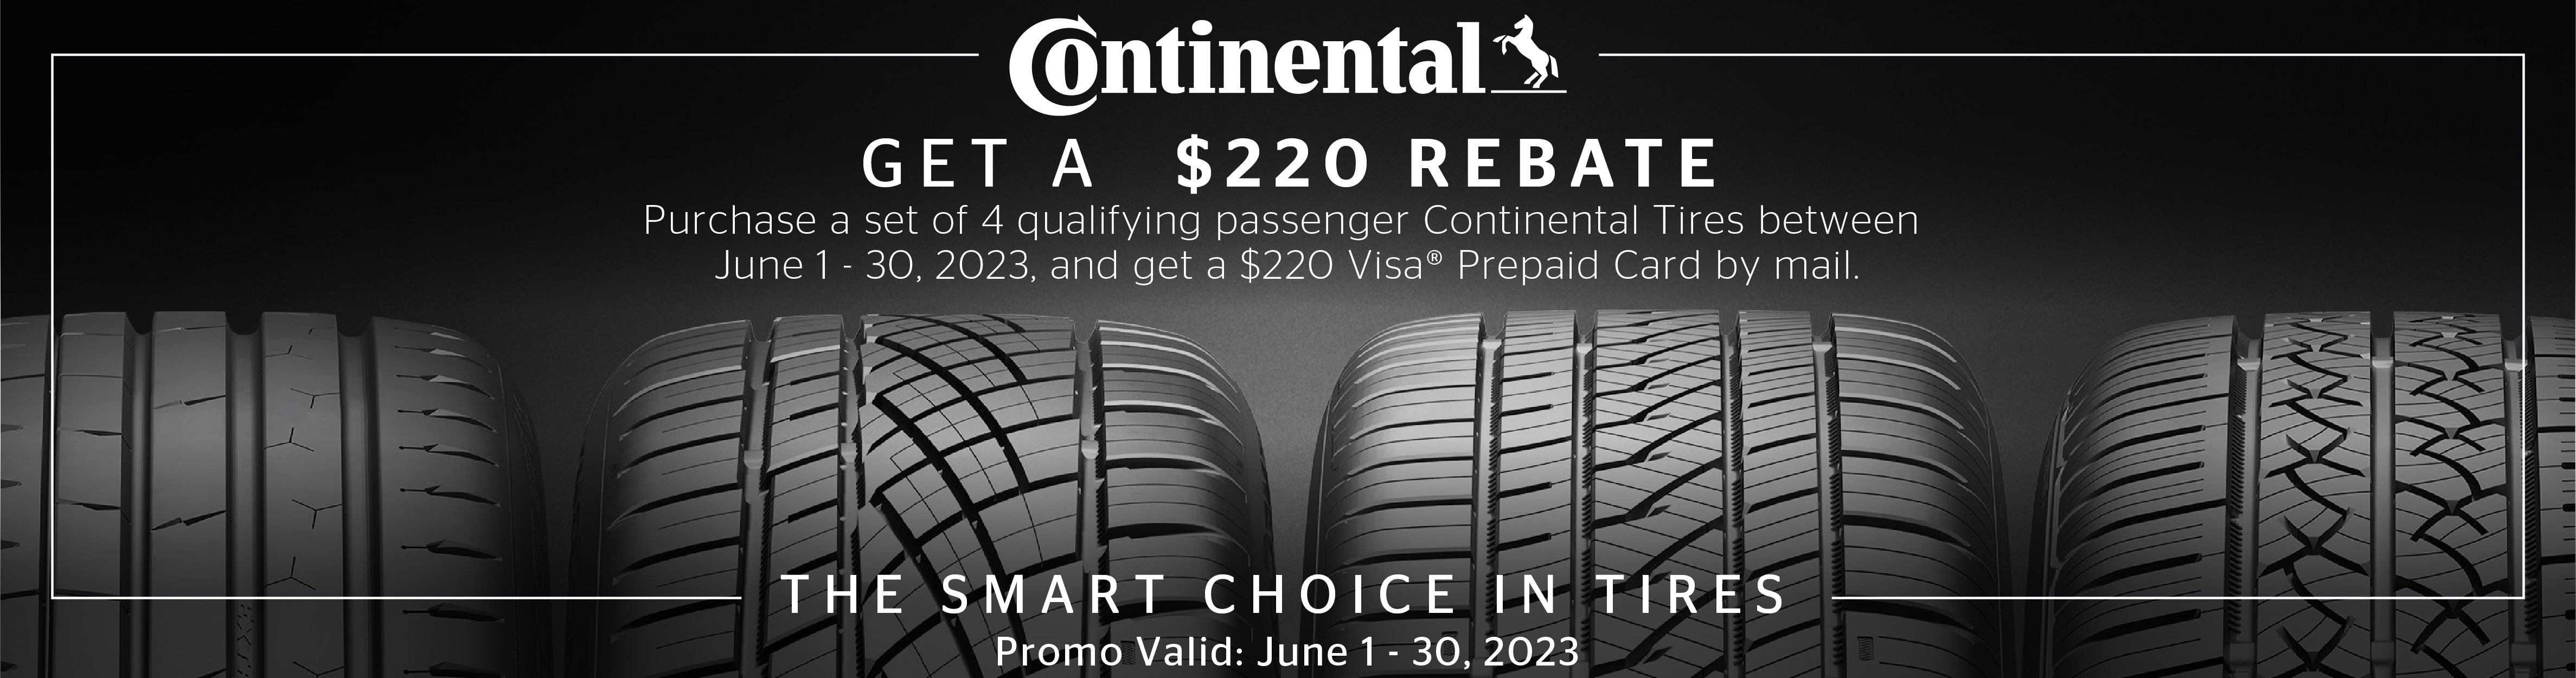 continental-tire-rebate-june-2023-giga-tires